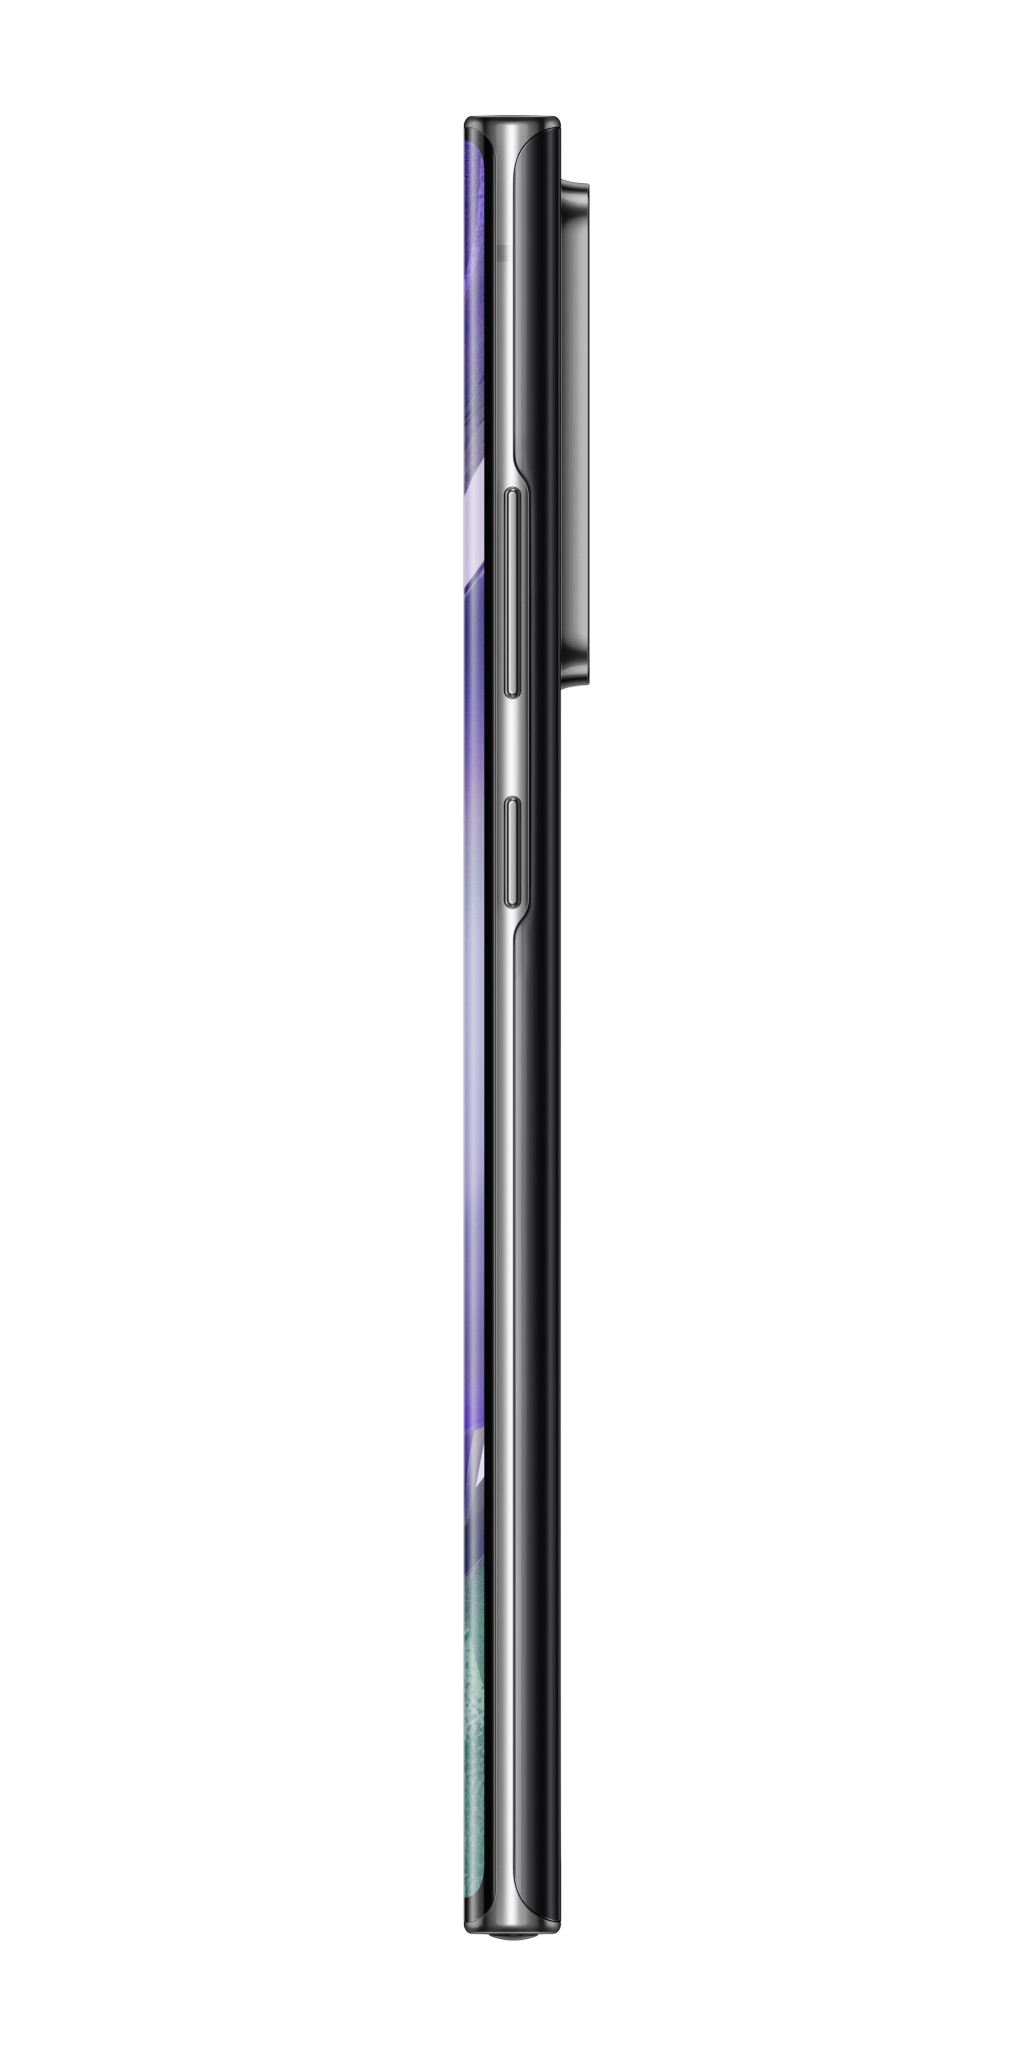 AT&T Samsung Galaxy Note20 Ultra 5G 128GB, Mystic Black - image 3 of 3